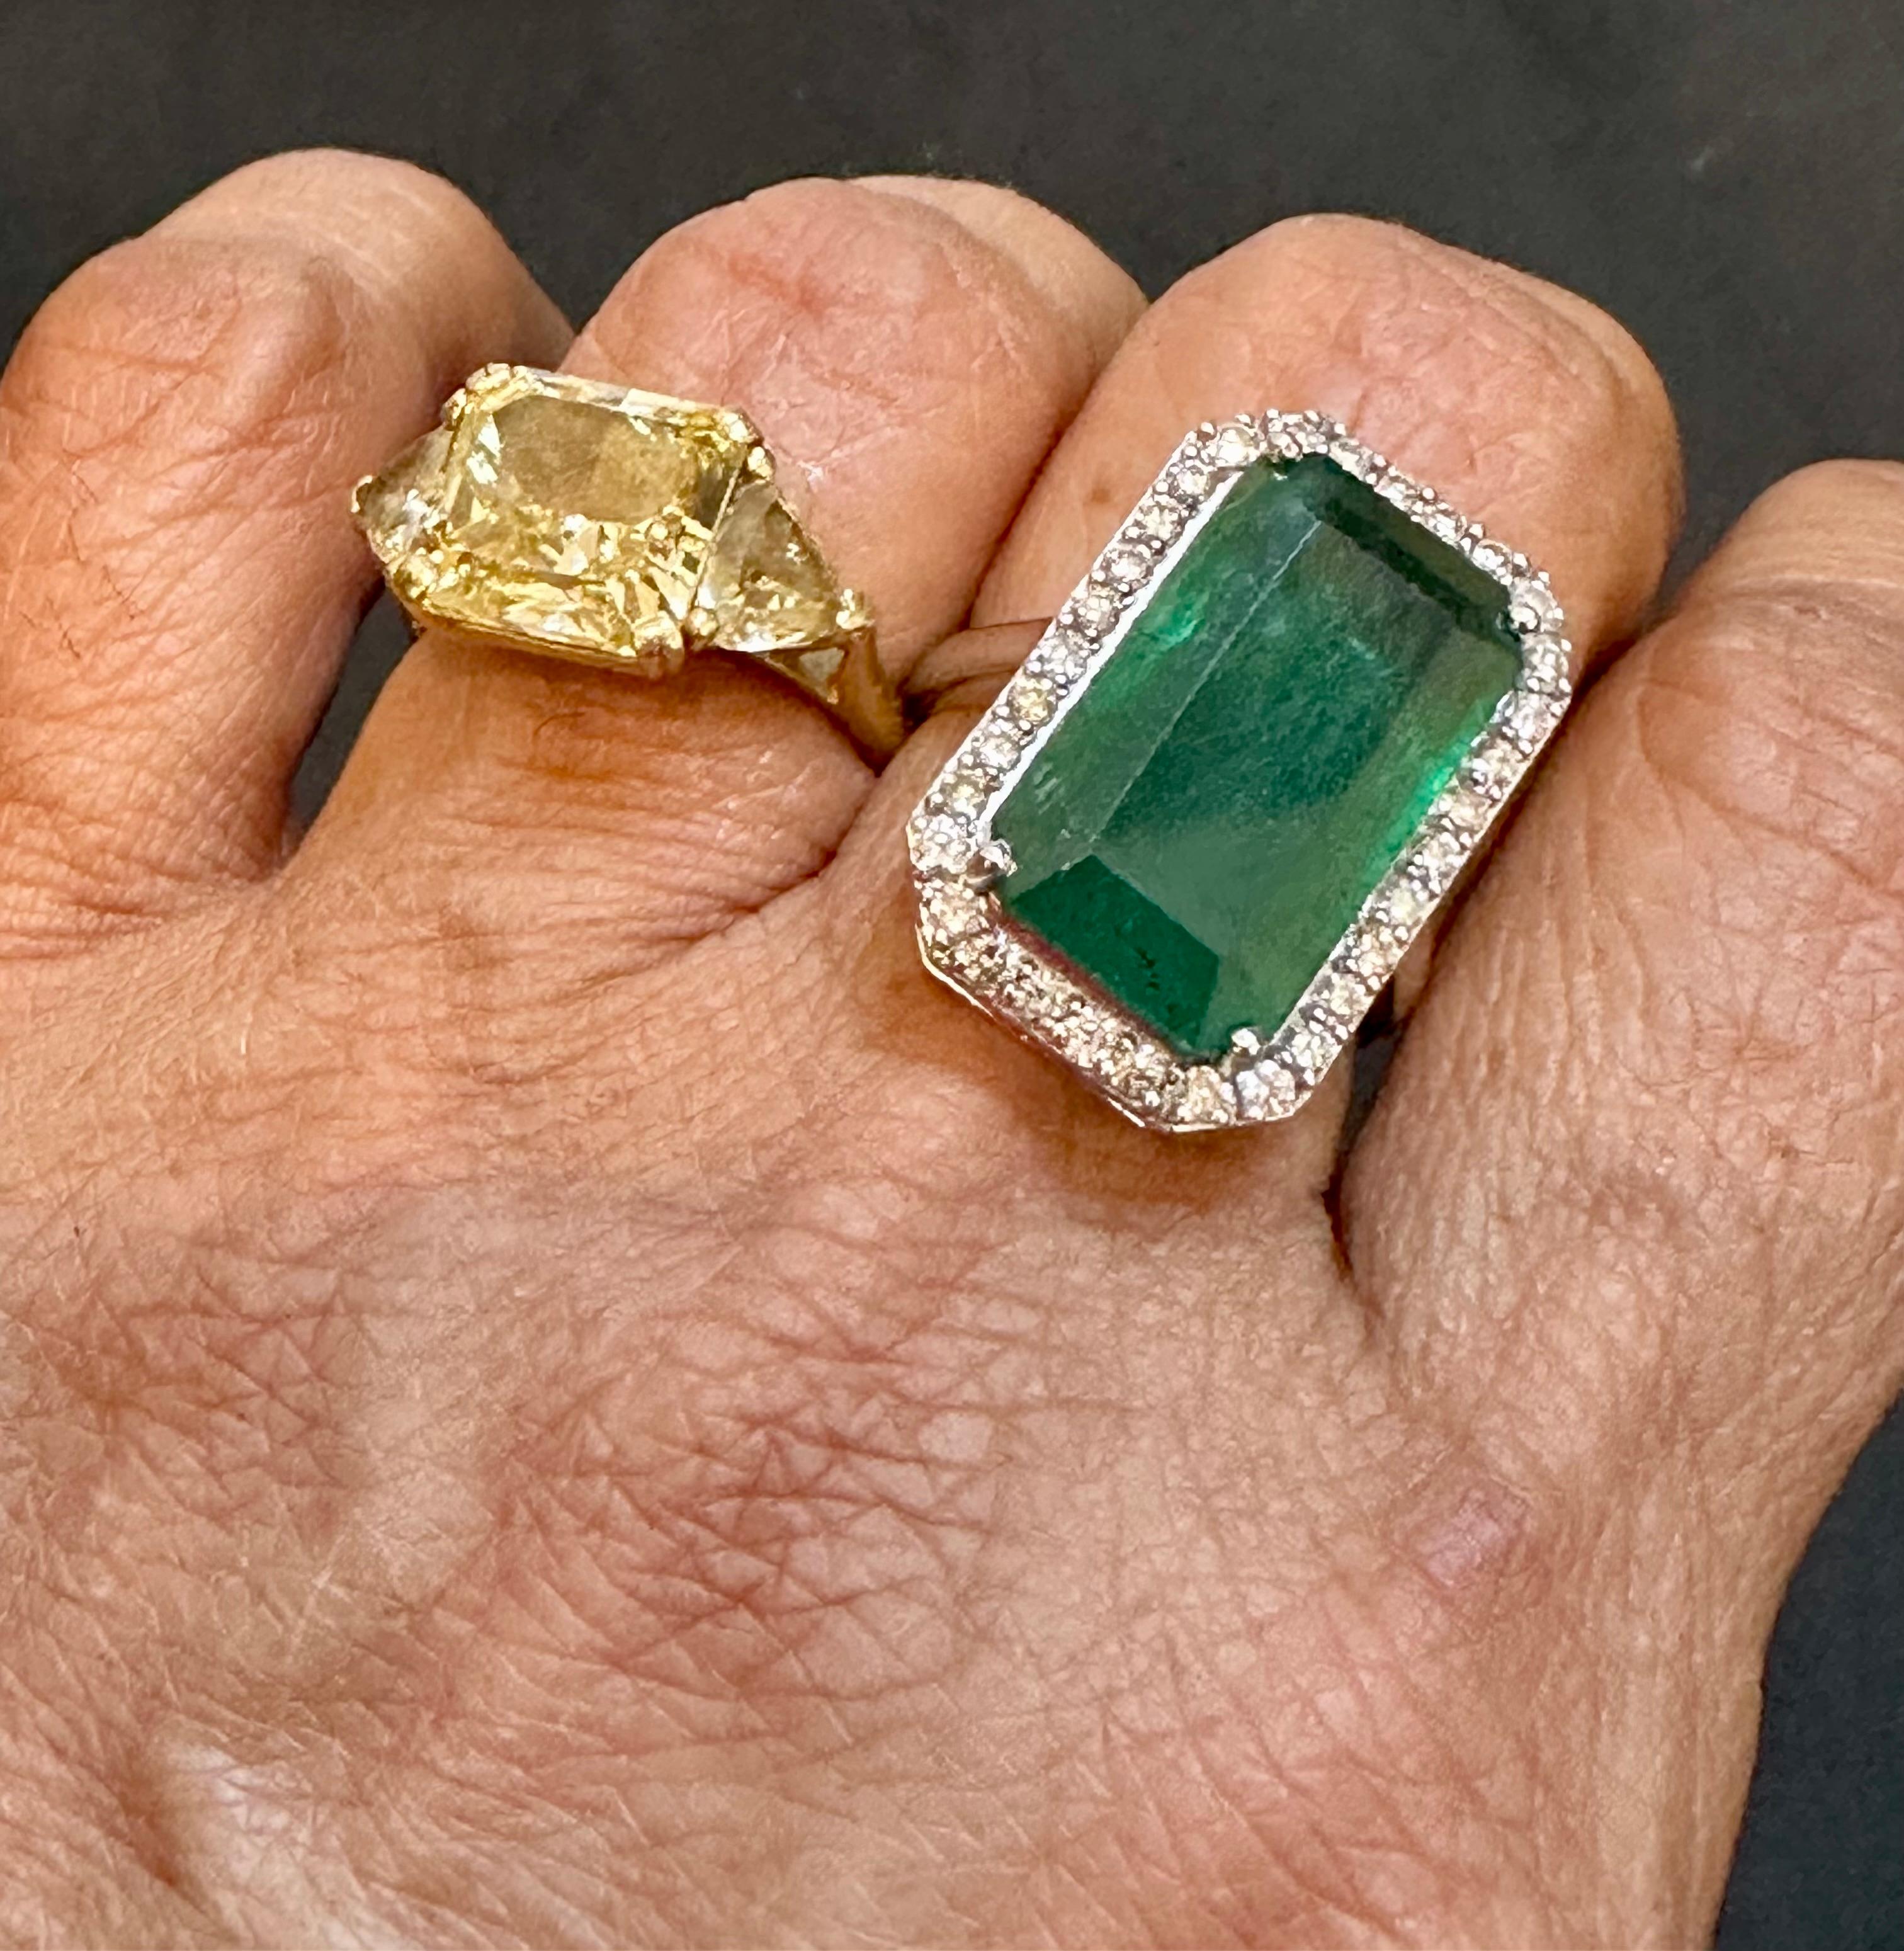 Natural 9 Carat Emerald Cut Zambian Emerald & Diamond Ring in 14 Kt White Gold 4